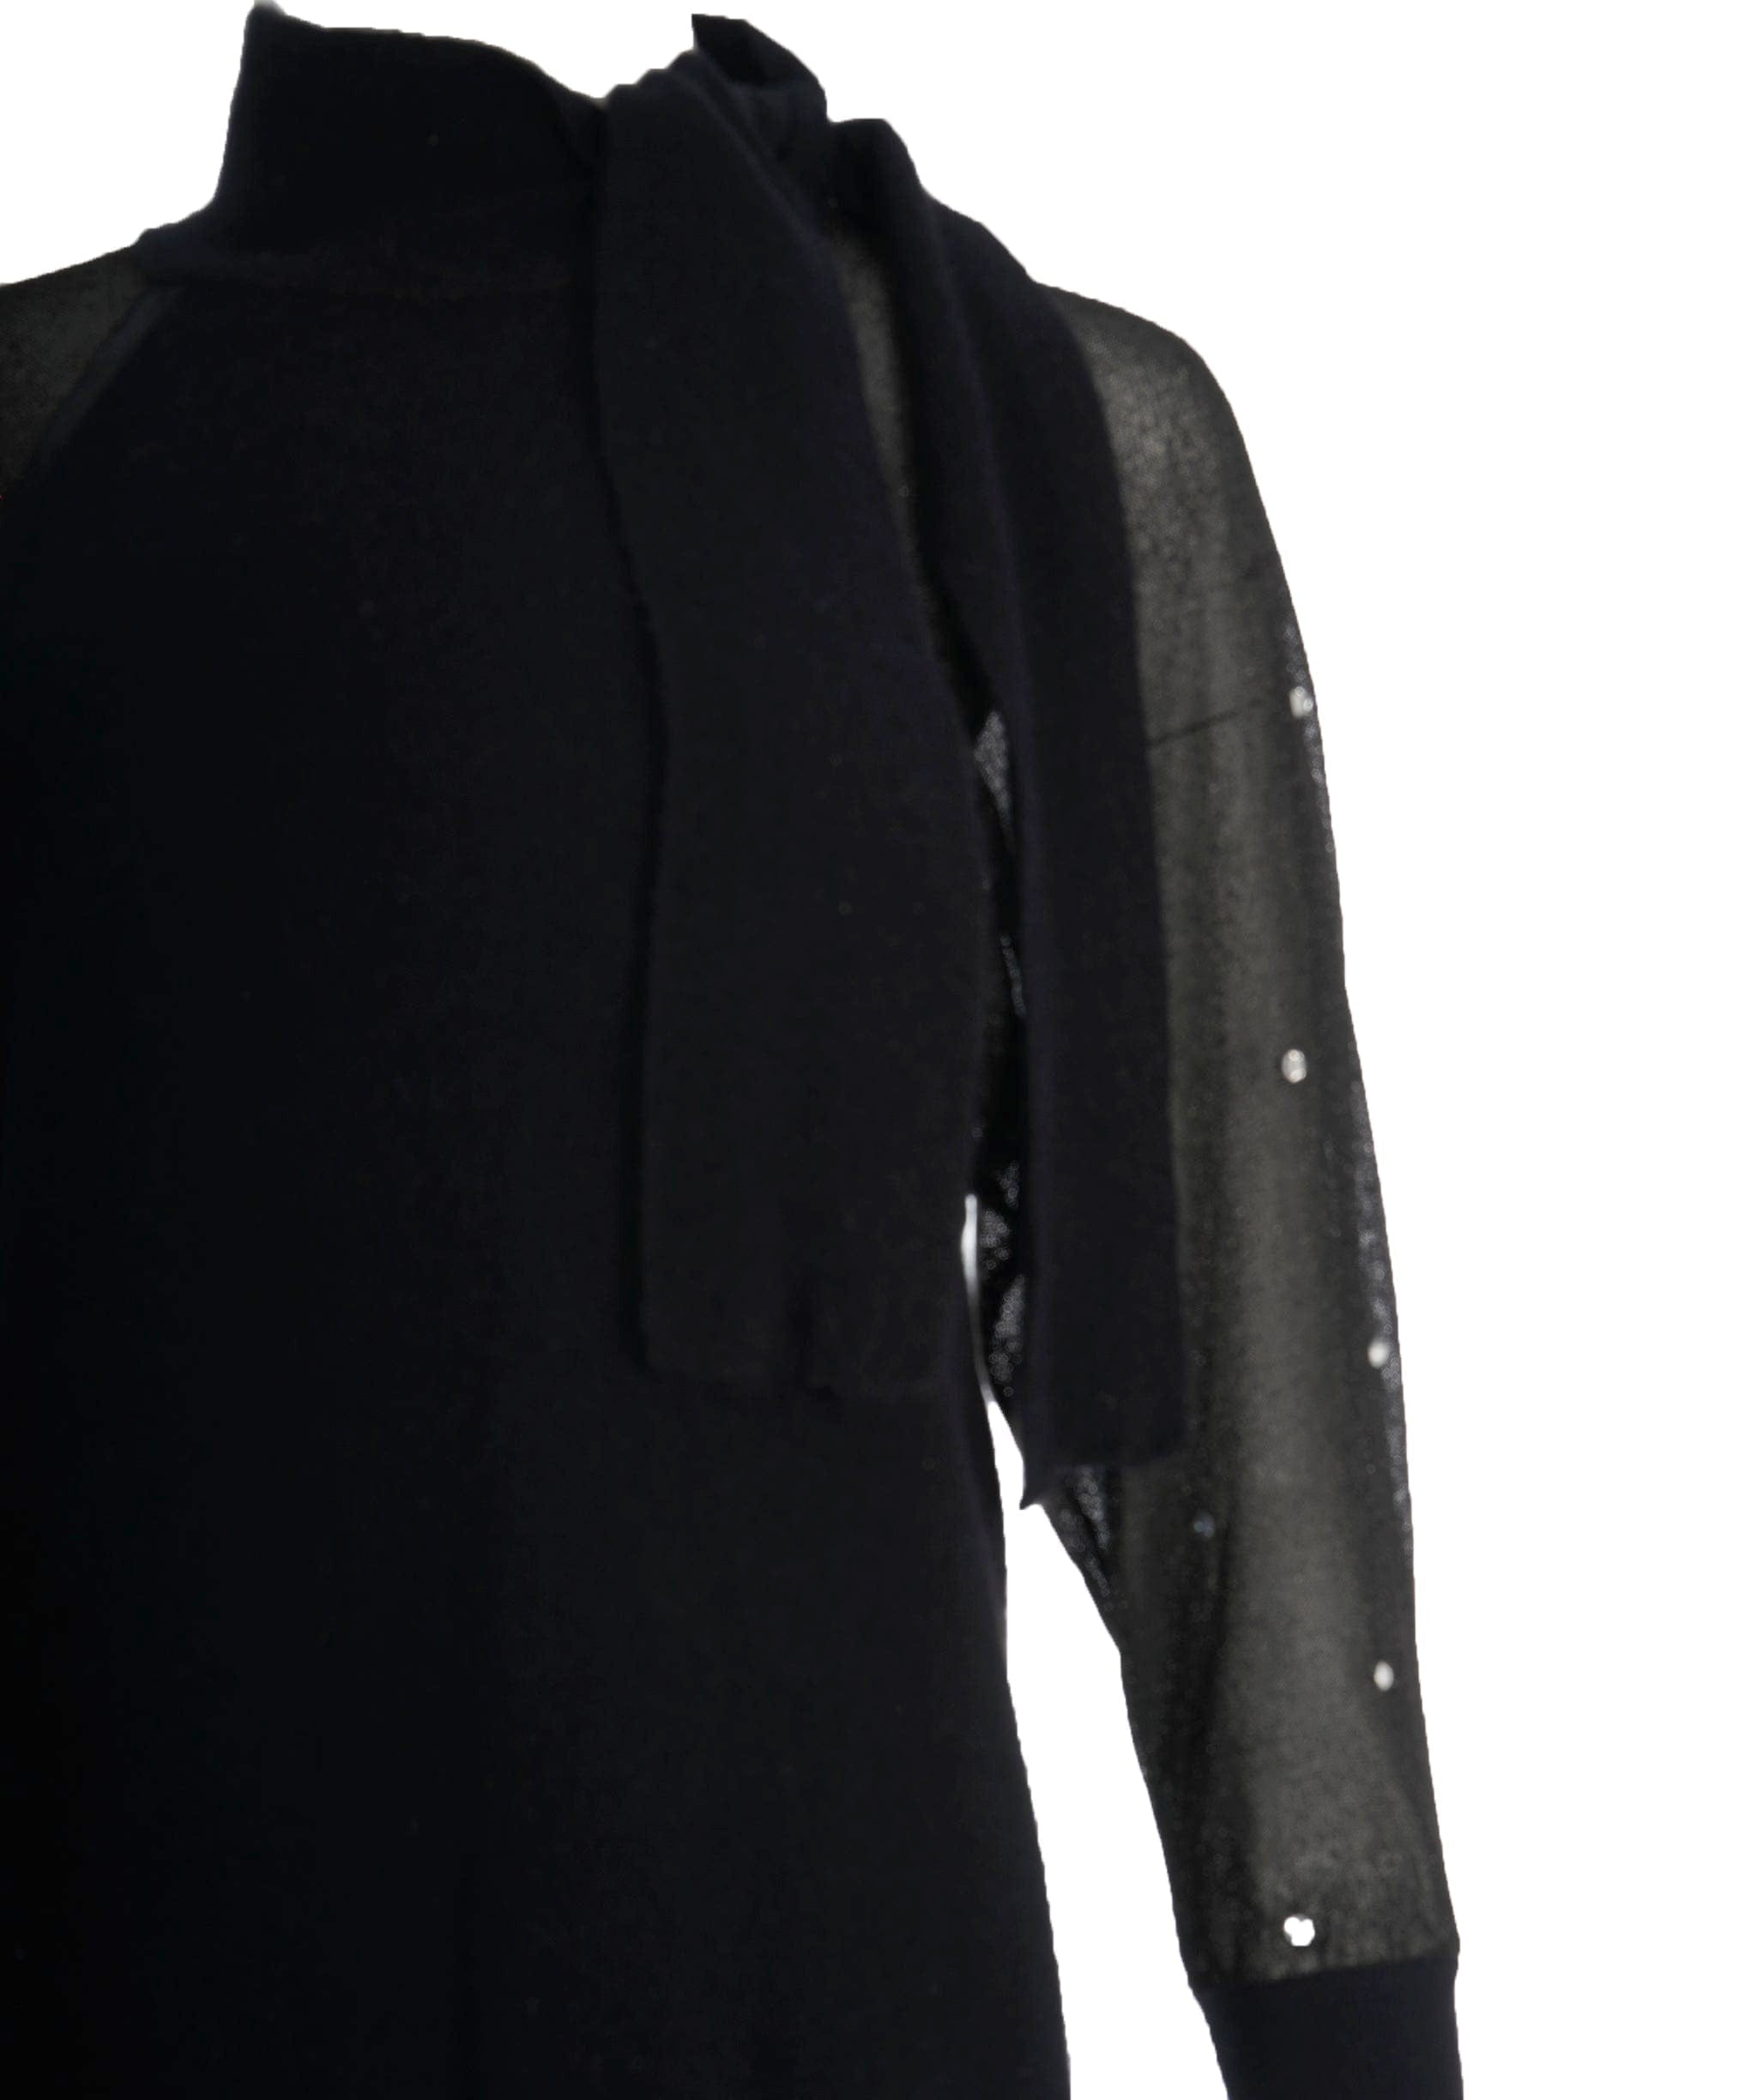 Yves Saint Laurent YSL angora dress long sleeved midi dress size 40 - AWL3839